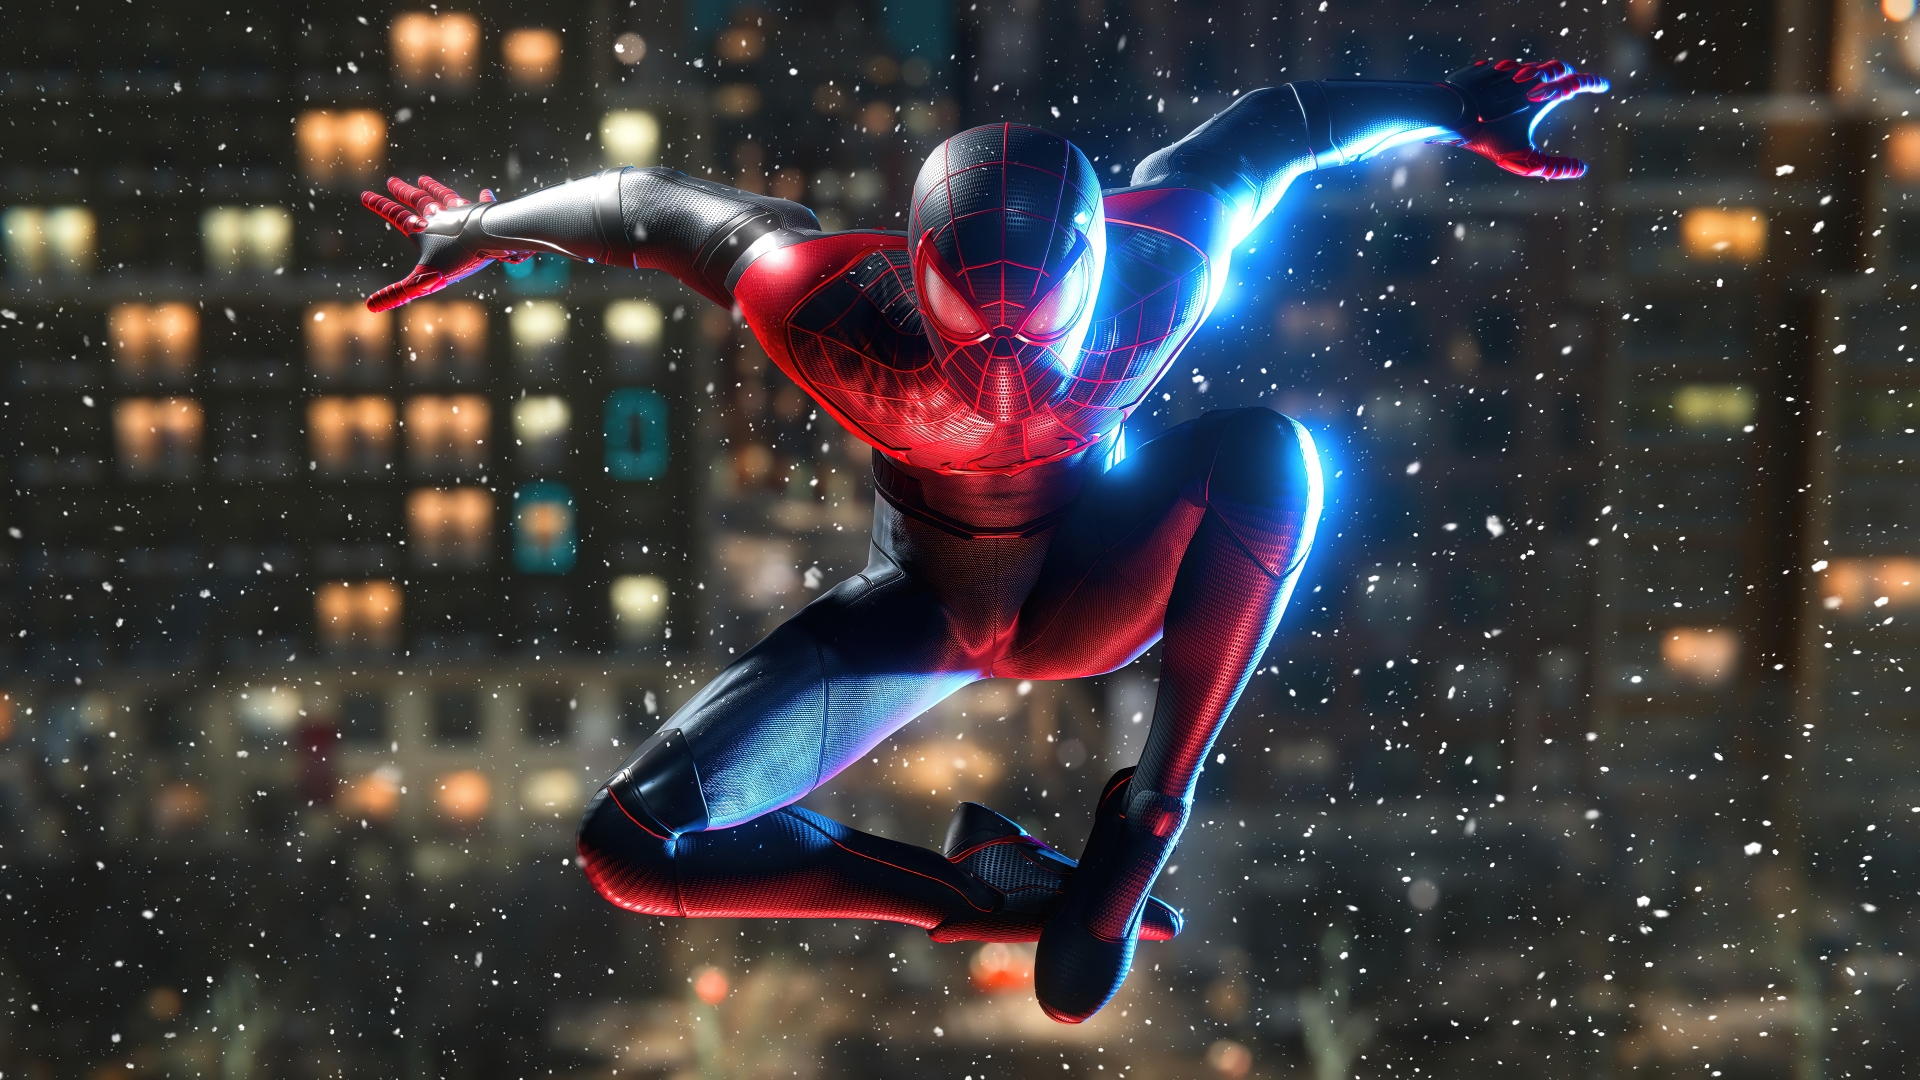 Spider Man / Человек-паук из комиксов Марвел / Marvel Человек-паук / Spider-Man